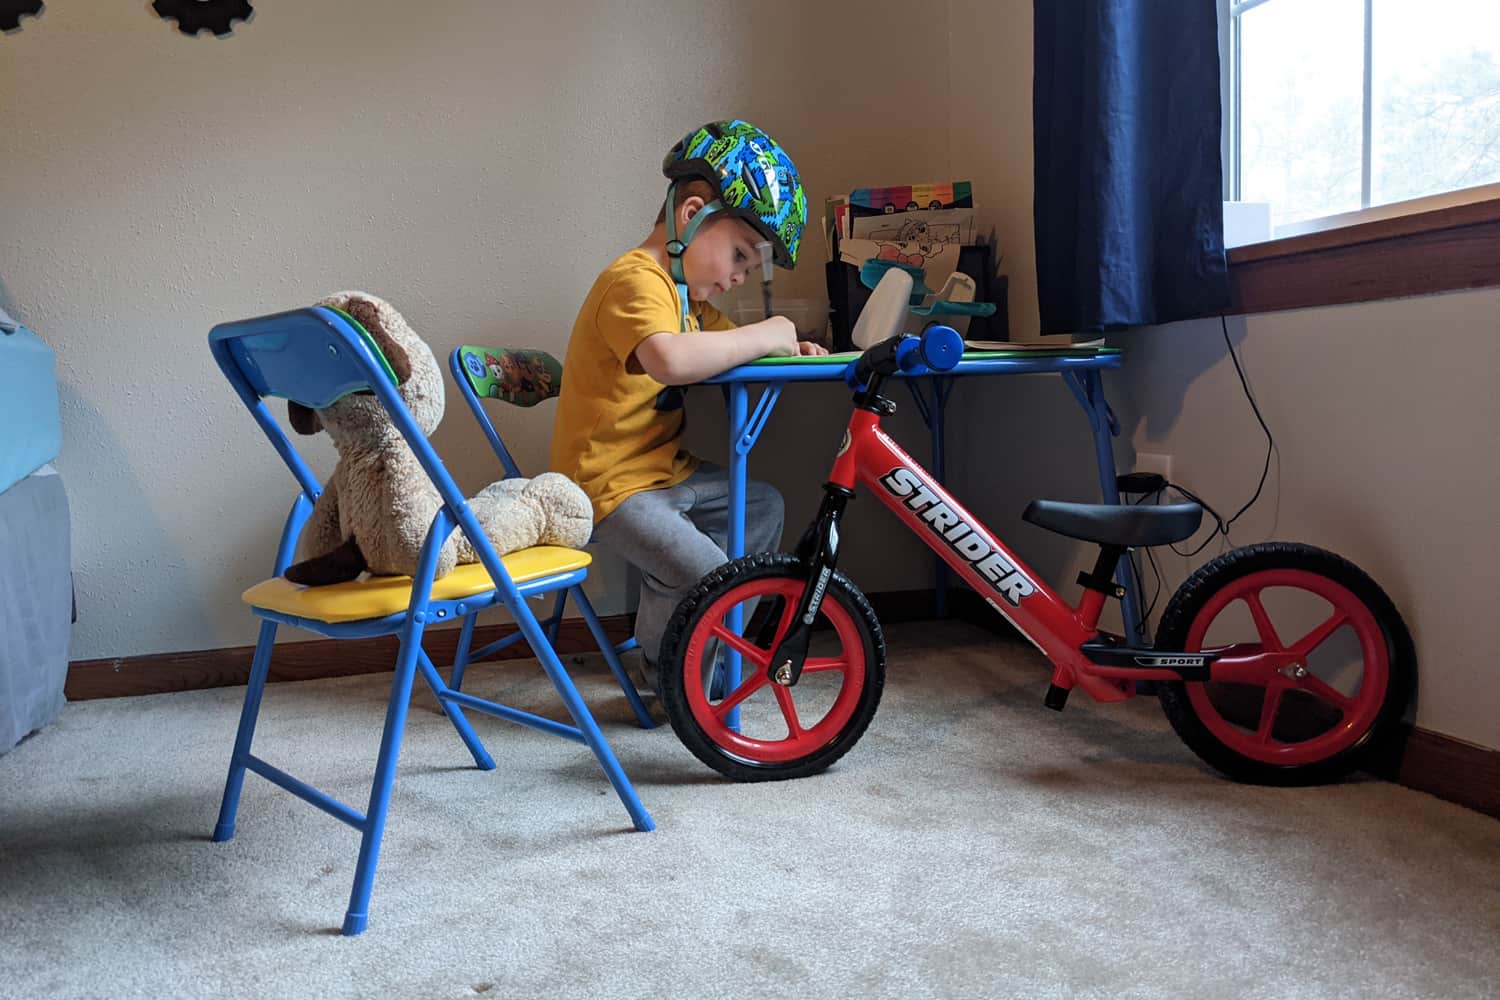 Details about   STRIDER 12 Sport Kids Balance Bike No-Pedal Learn To Ride Pre Bike orange 